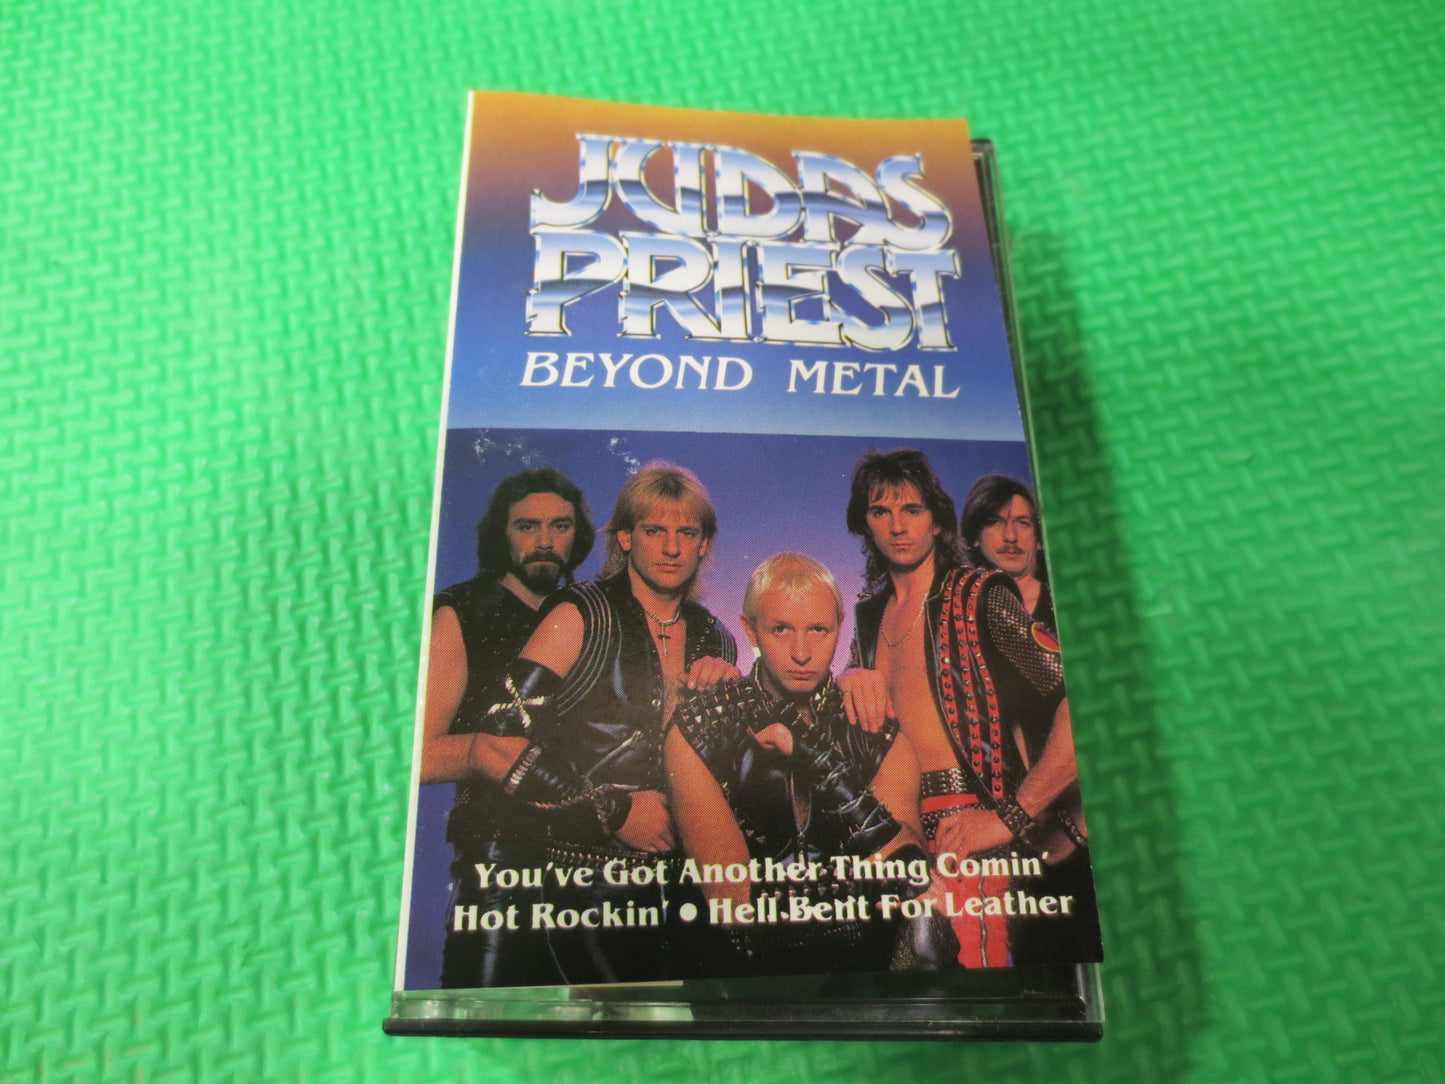 JUDAS PRIEST Tape, Beyond METAL Tape, Judas Priest Album, Judas Priest Music, Tape Cassette, Rock Cassette, 1987 Cassette